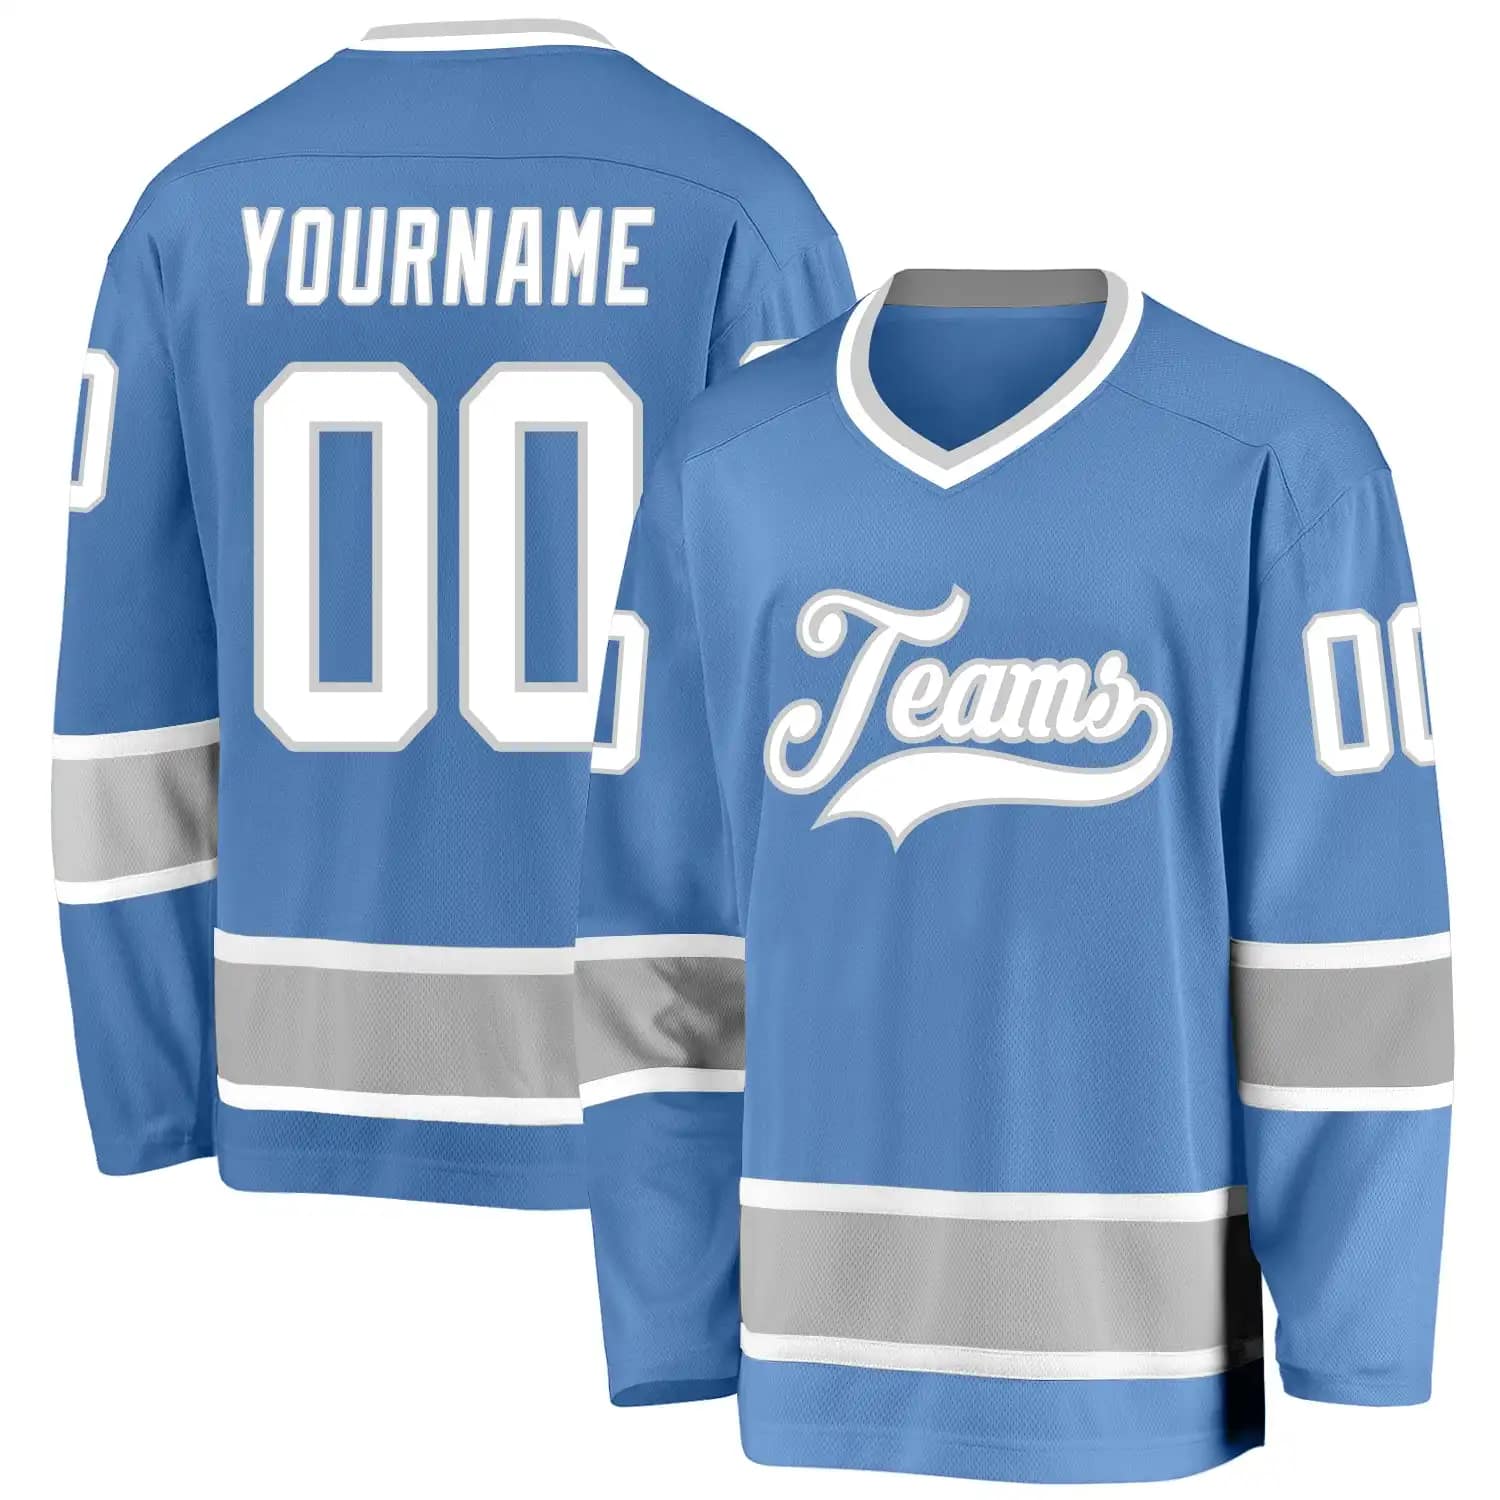 Stitched And Print Light Blue White-gray Hockey Jersey Custom